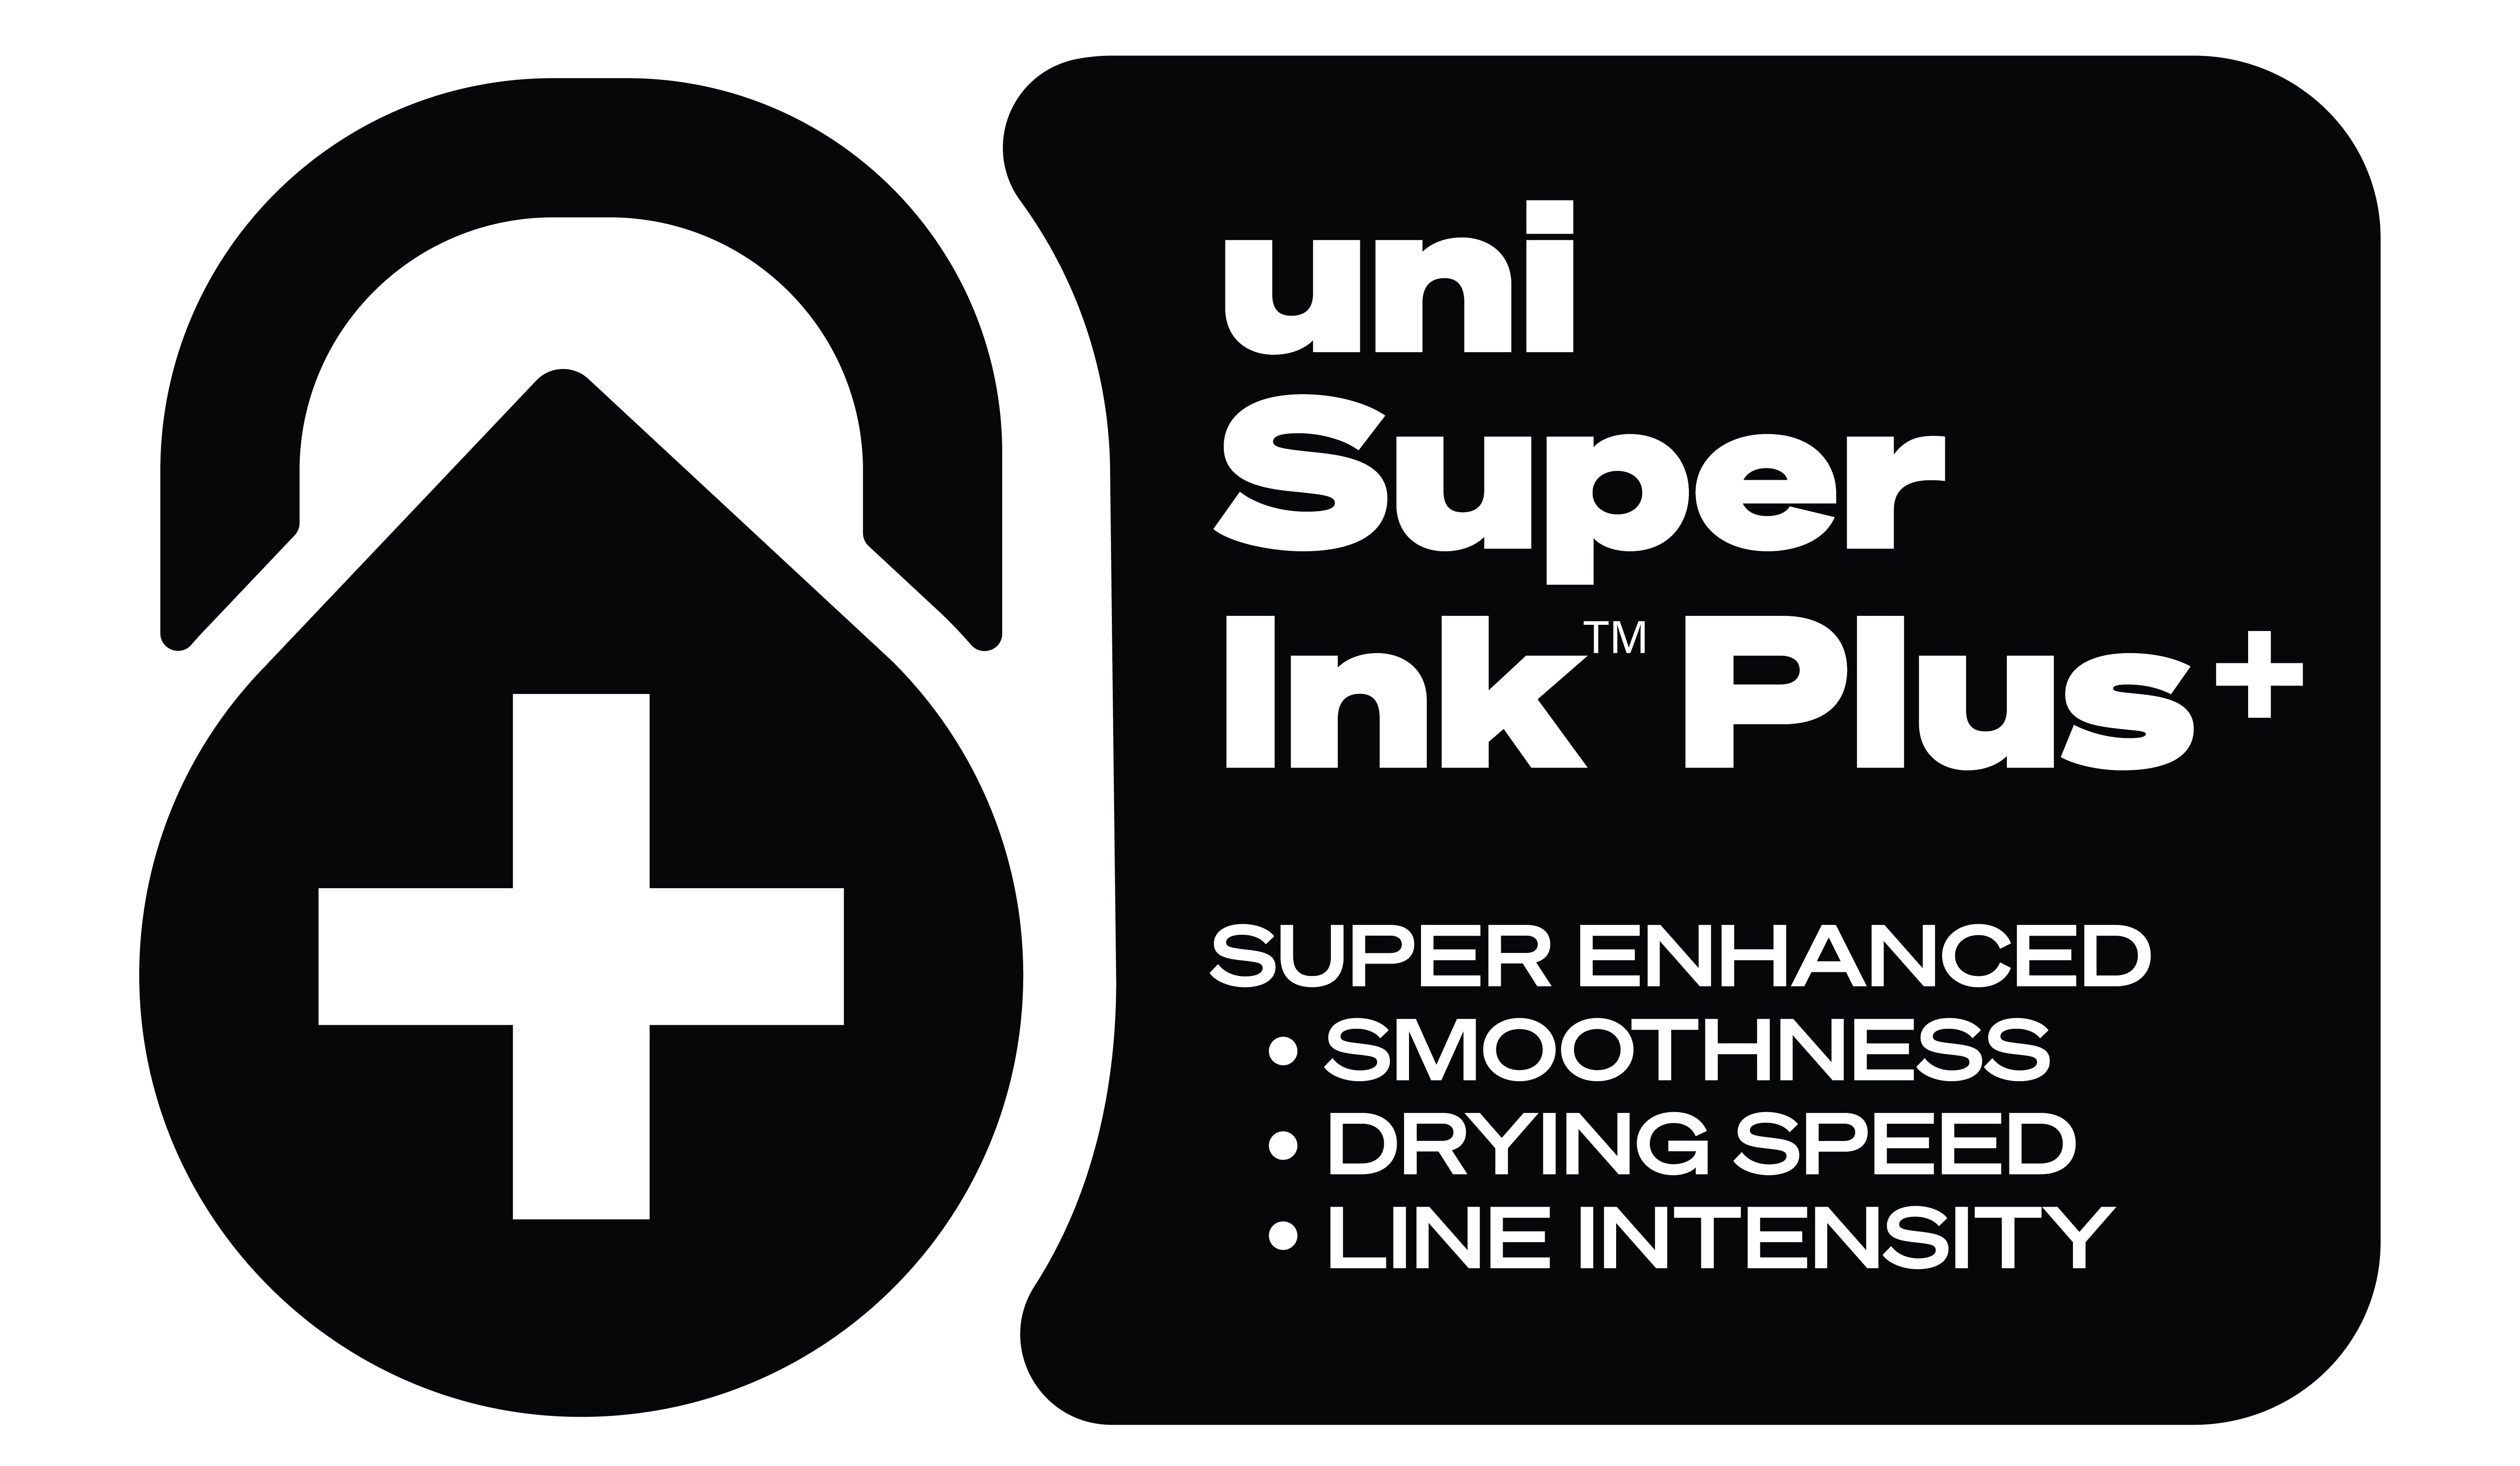 uniball™ 207 Plus+ Retractable Gel Pens, Medium Point (0.7mm), Assorted, 6 Pack